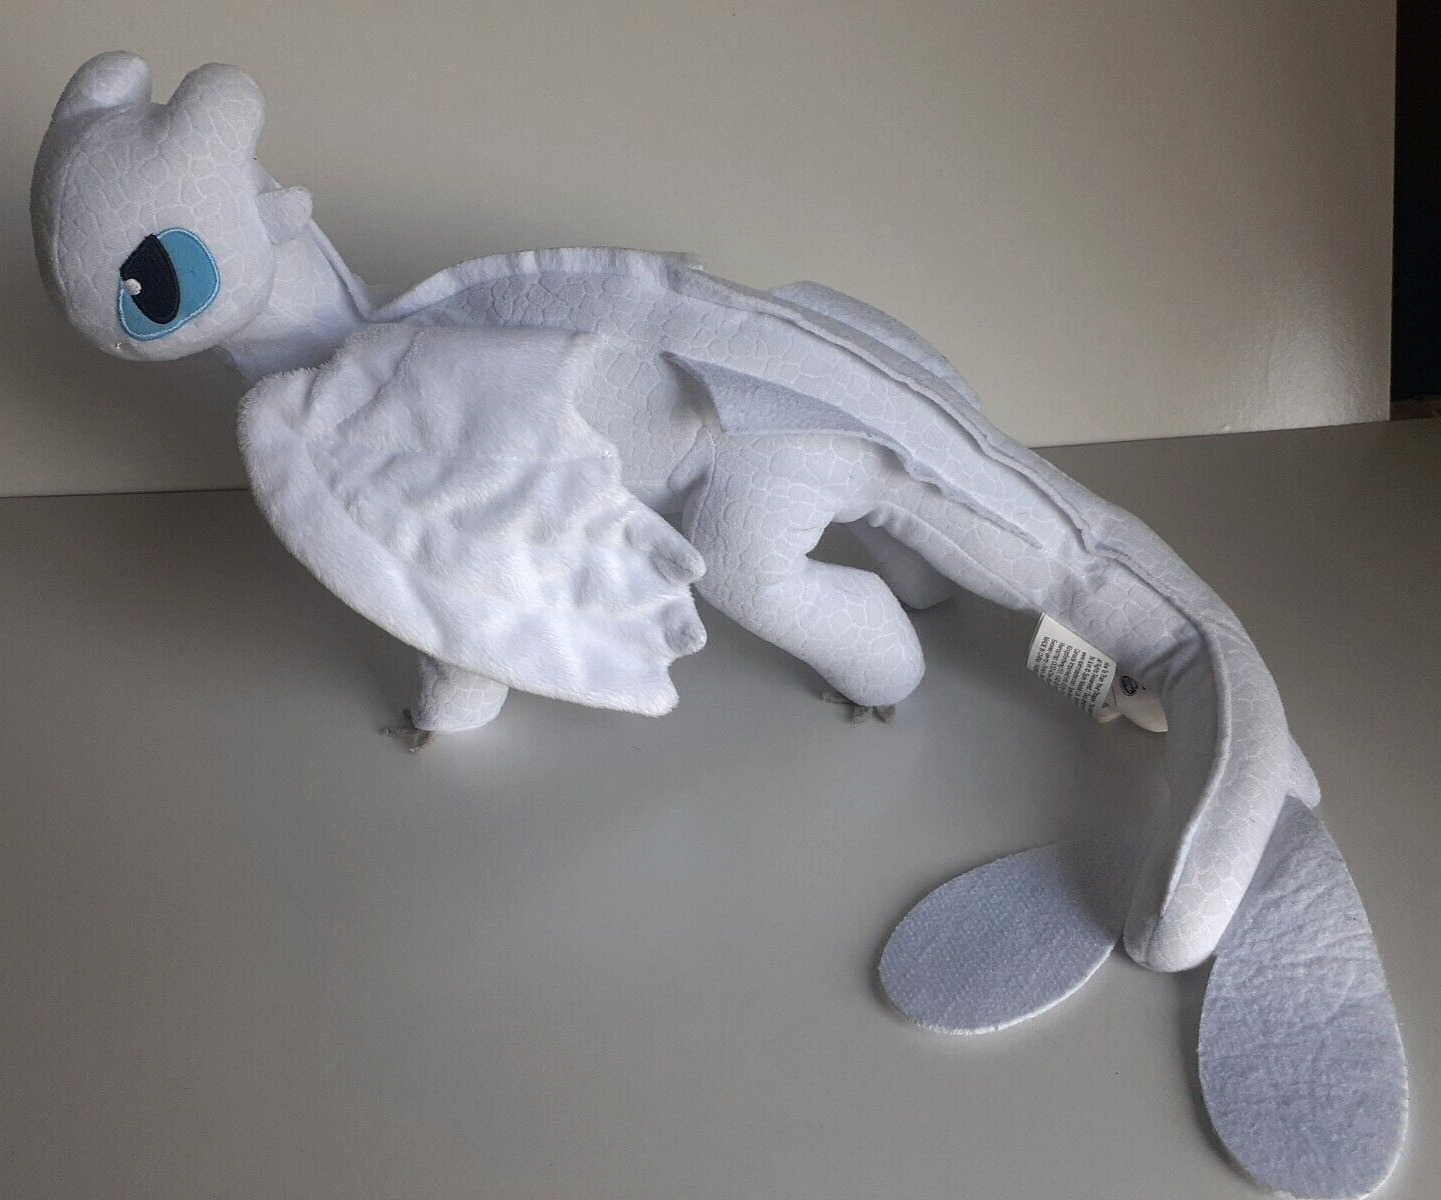 LIGHT FURY Plush, How To Train Your Dragon, Massive 60cm Long Plushie Toy